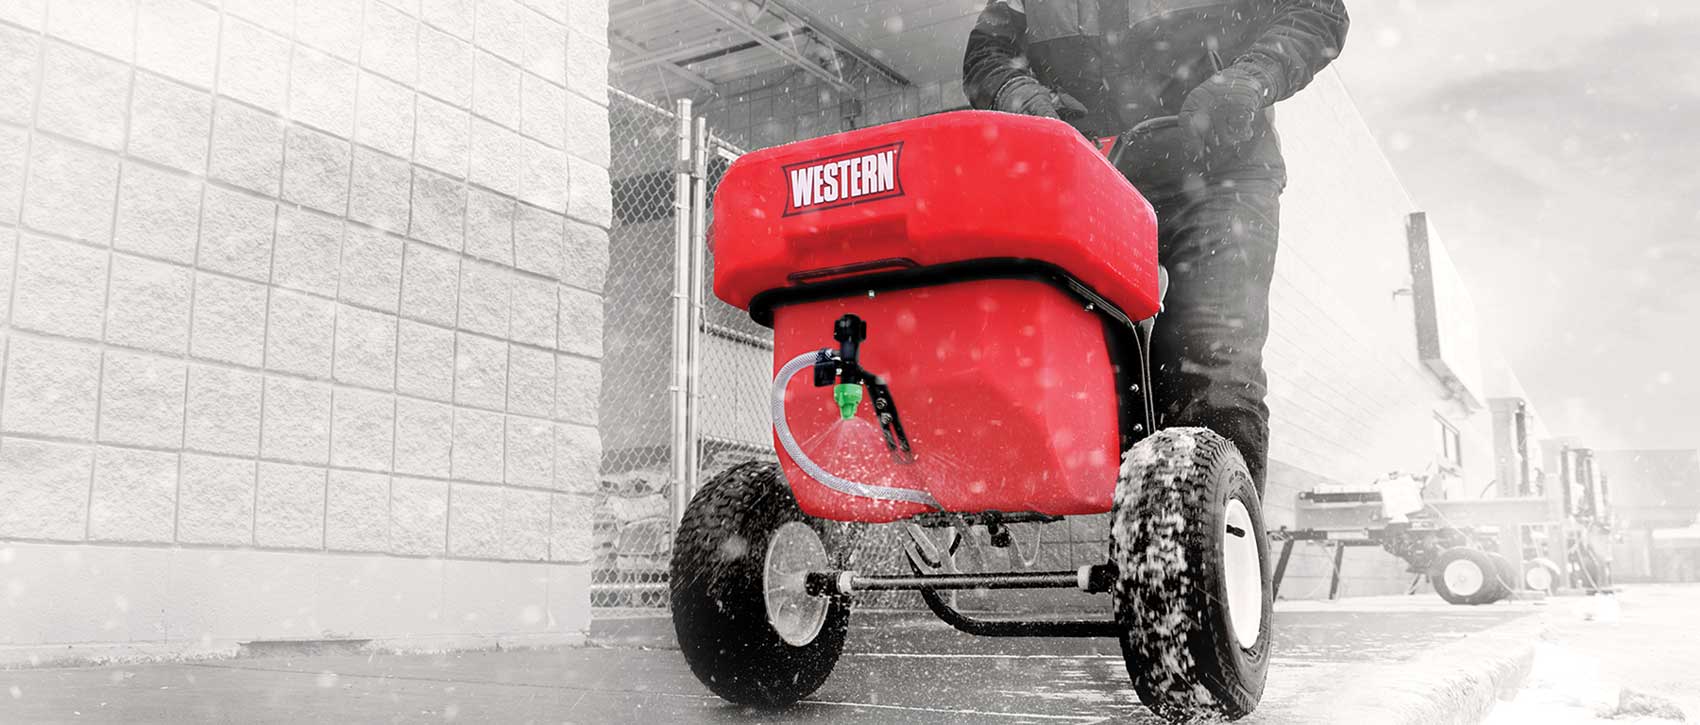 Western SS-120 sidewalk sprayer for liquid anti-icing before storms